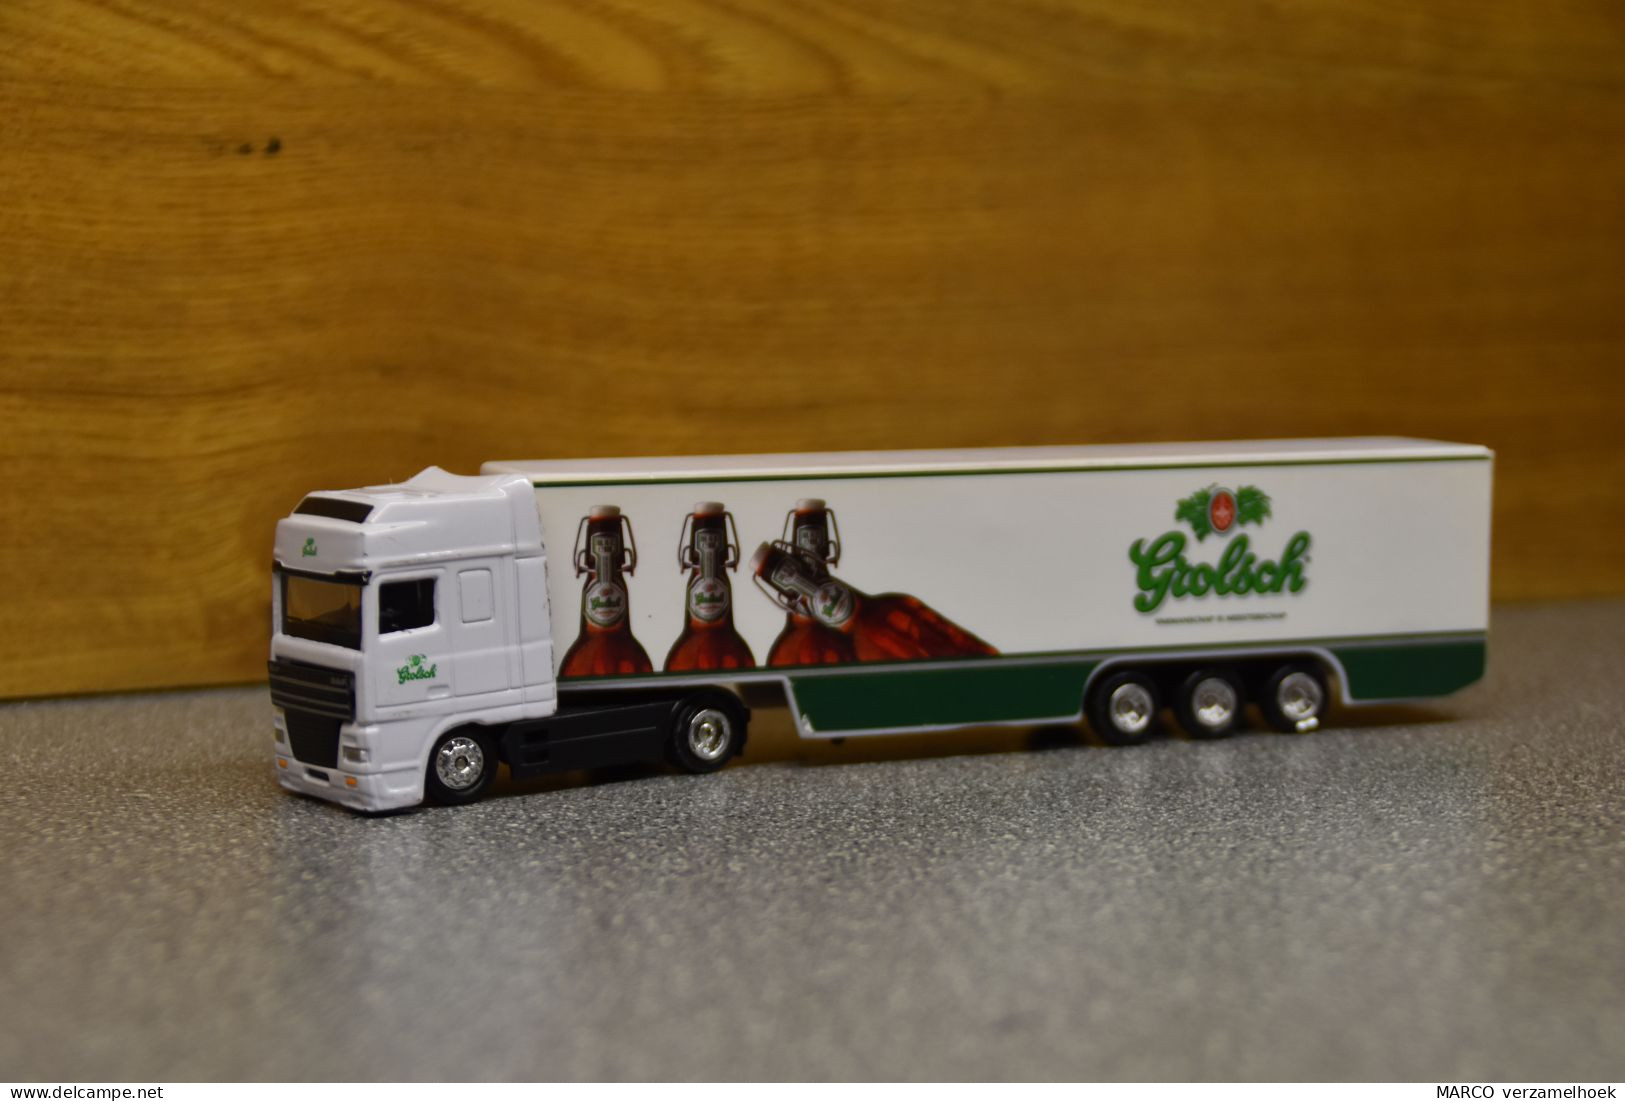 Vrachtwagen-truck Grolsch Bieren Groenlo-enschede (NL) Scale 1:87 DAF - Massstab 1:87